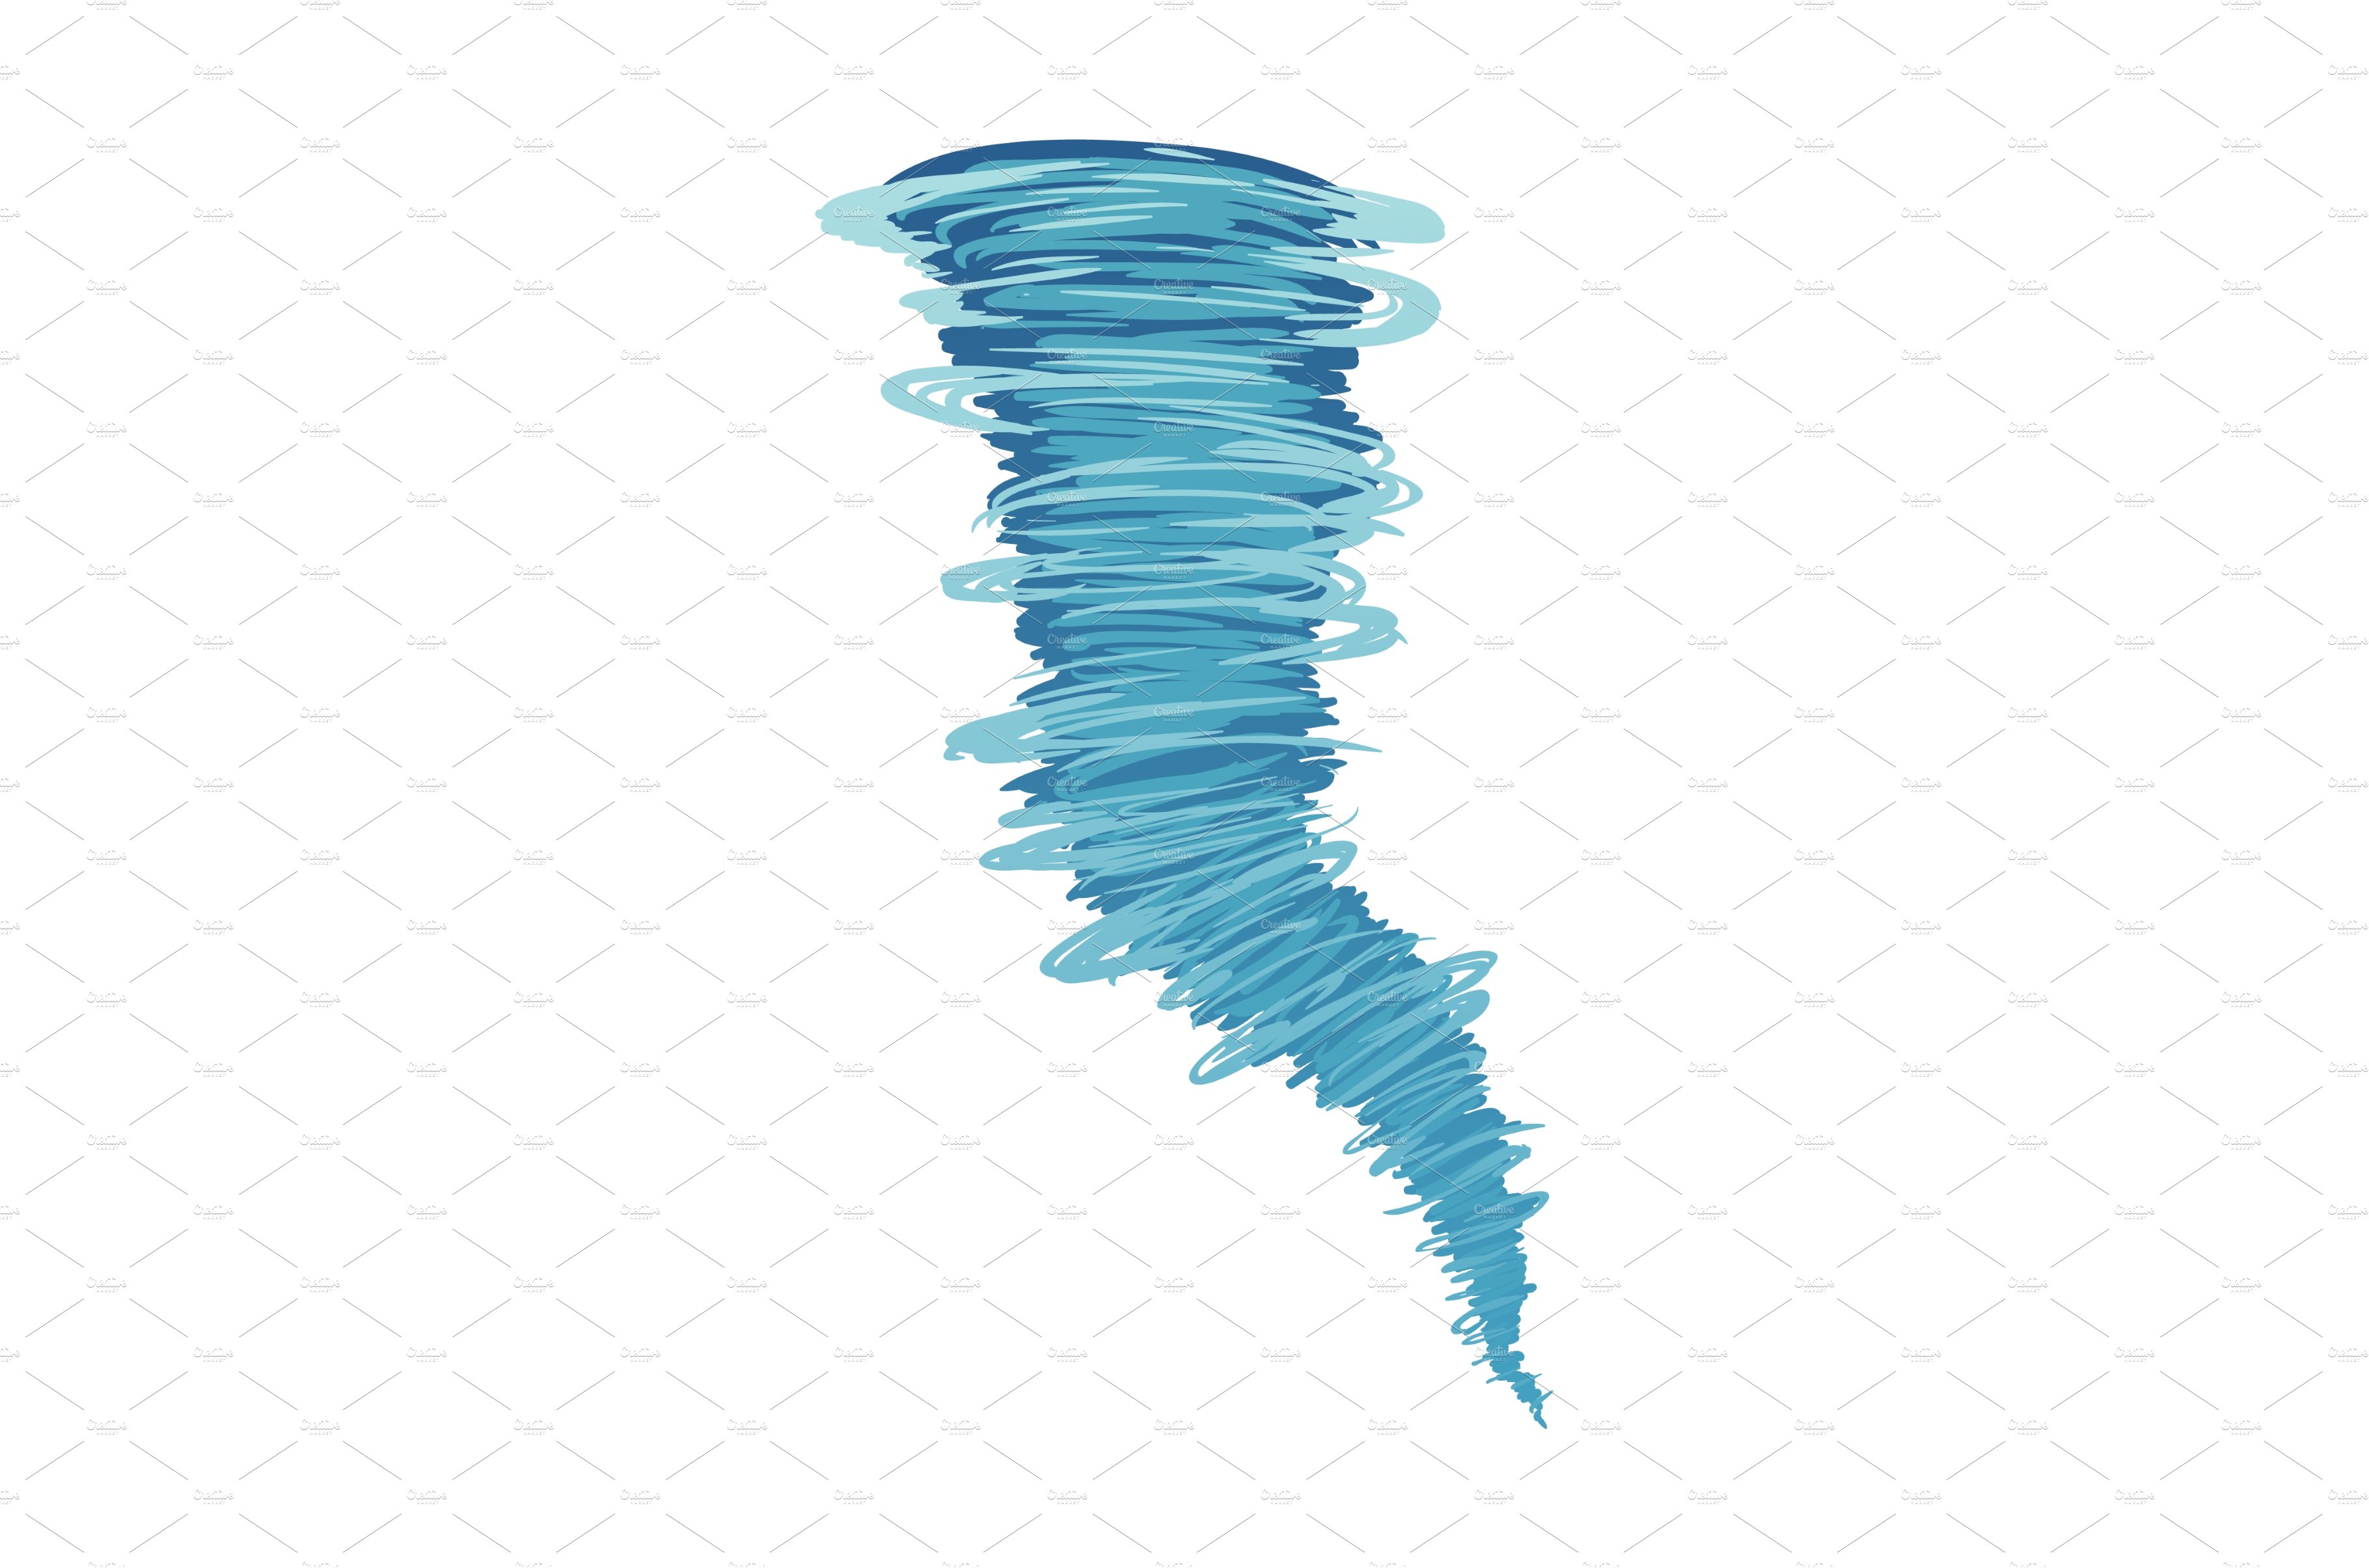 Tornado. Stylized cartoon cover image.